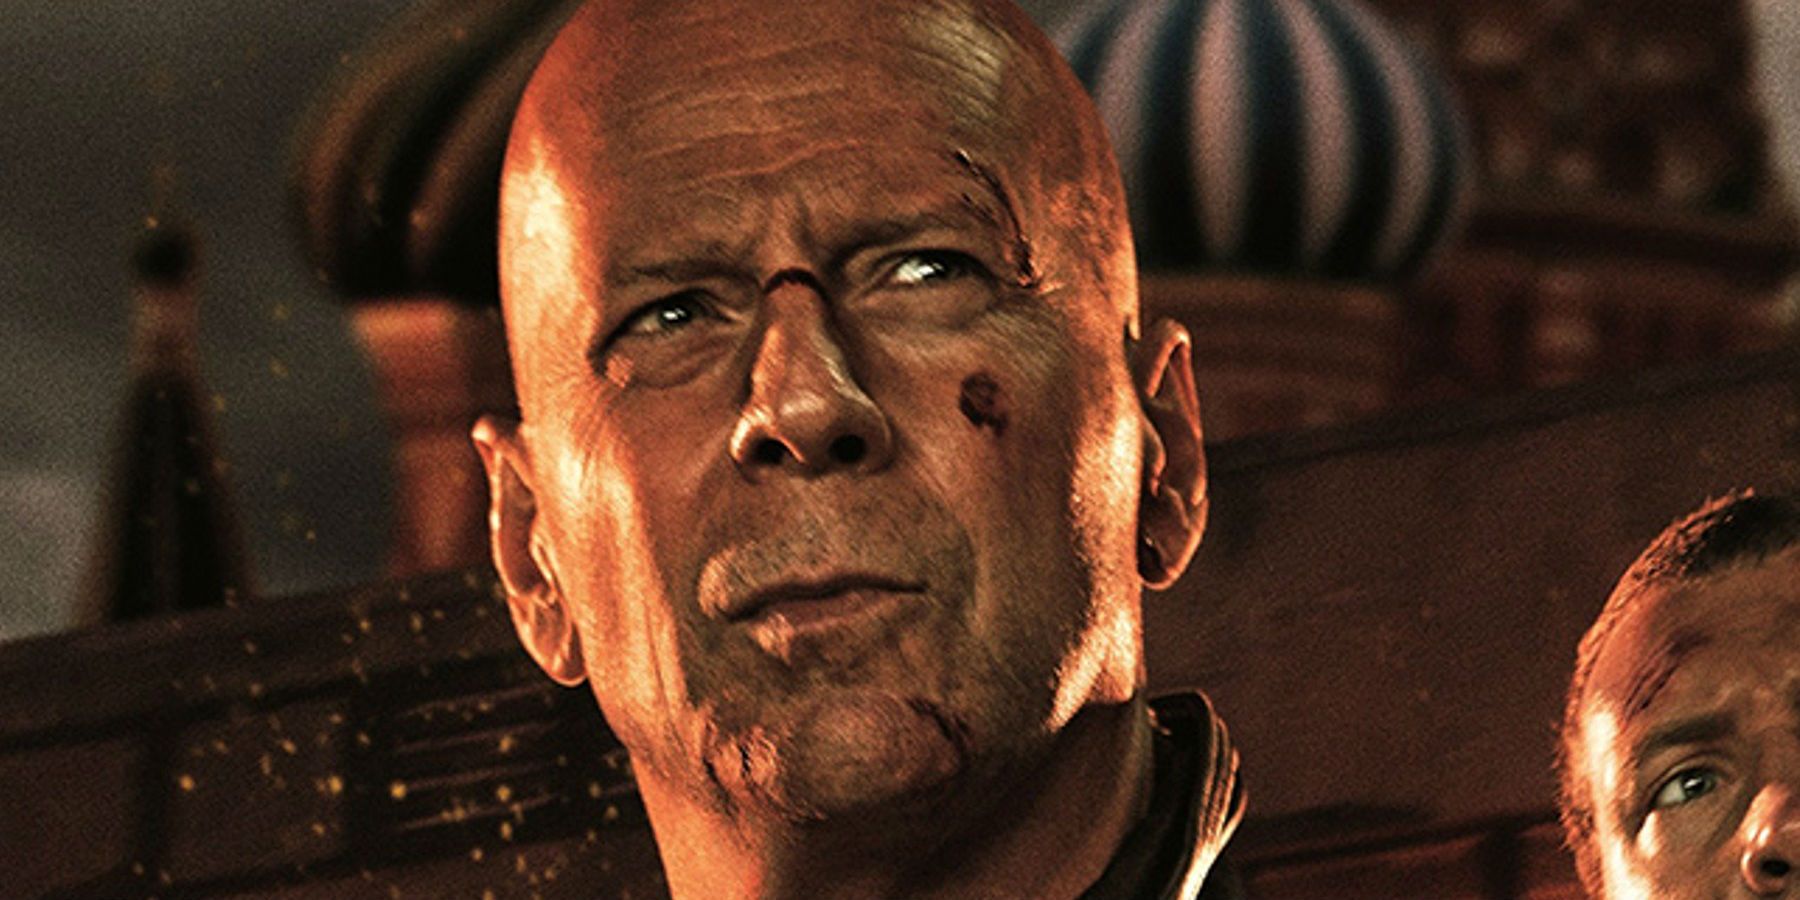 A Good Day to Die Hard - Bruce Willis as John McClane